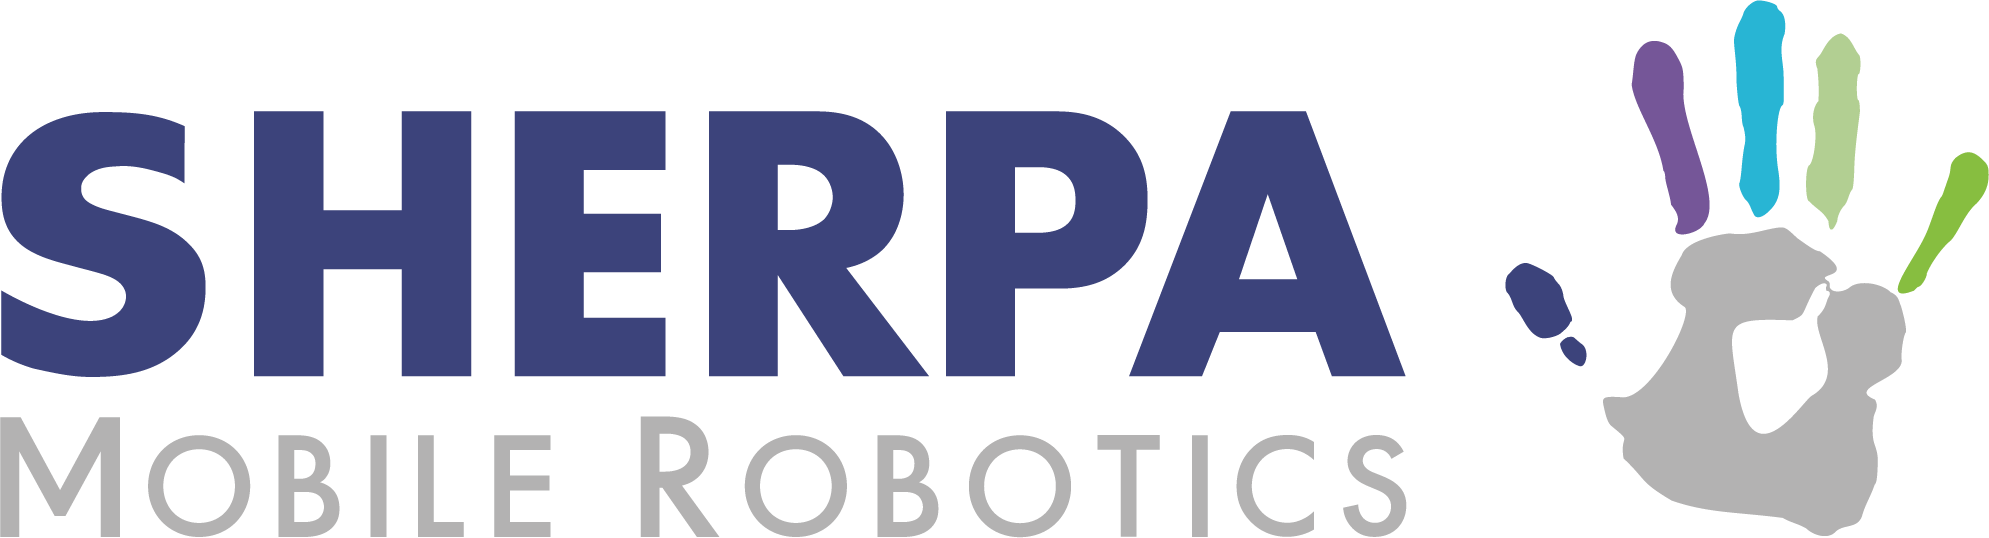 SHERPA MOBILE ROBOTICS